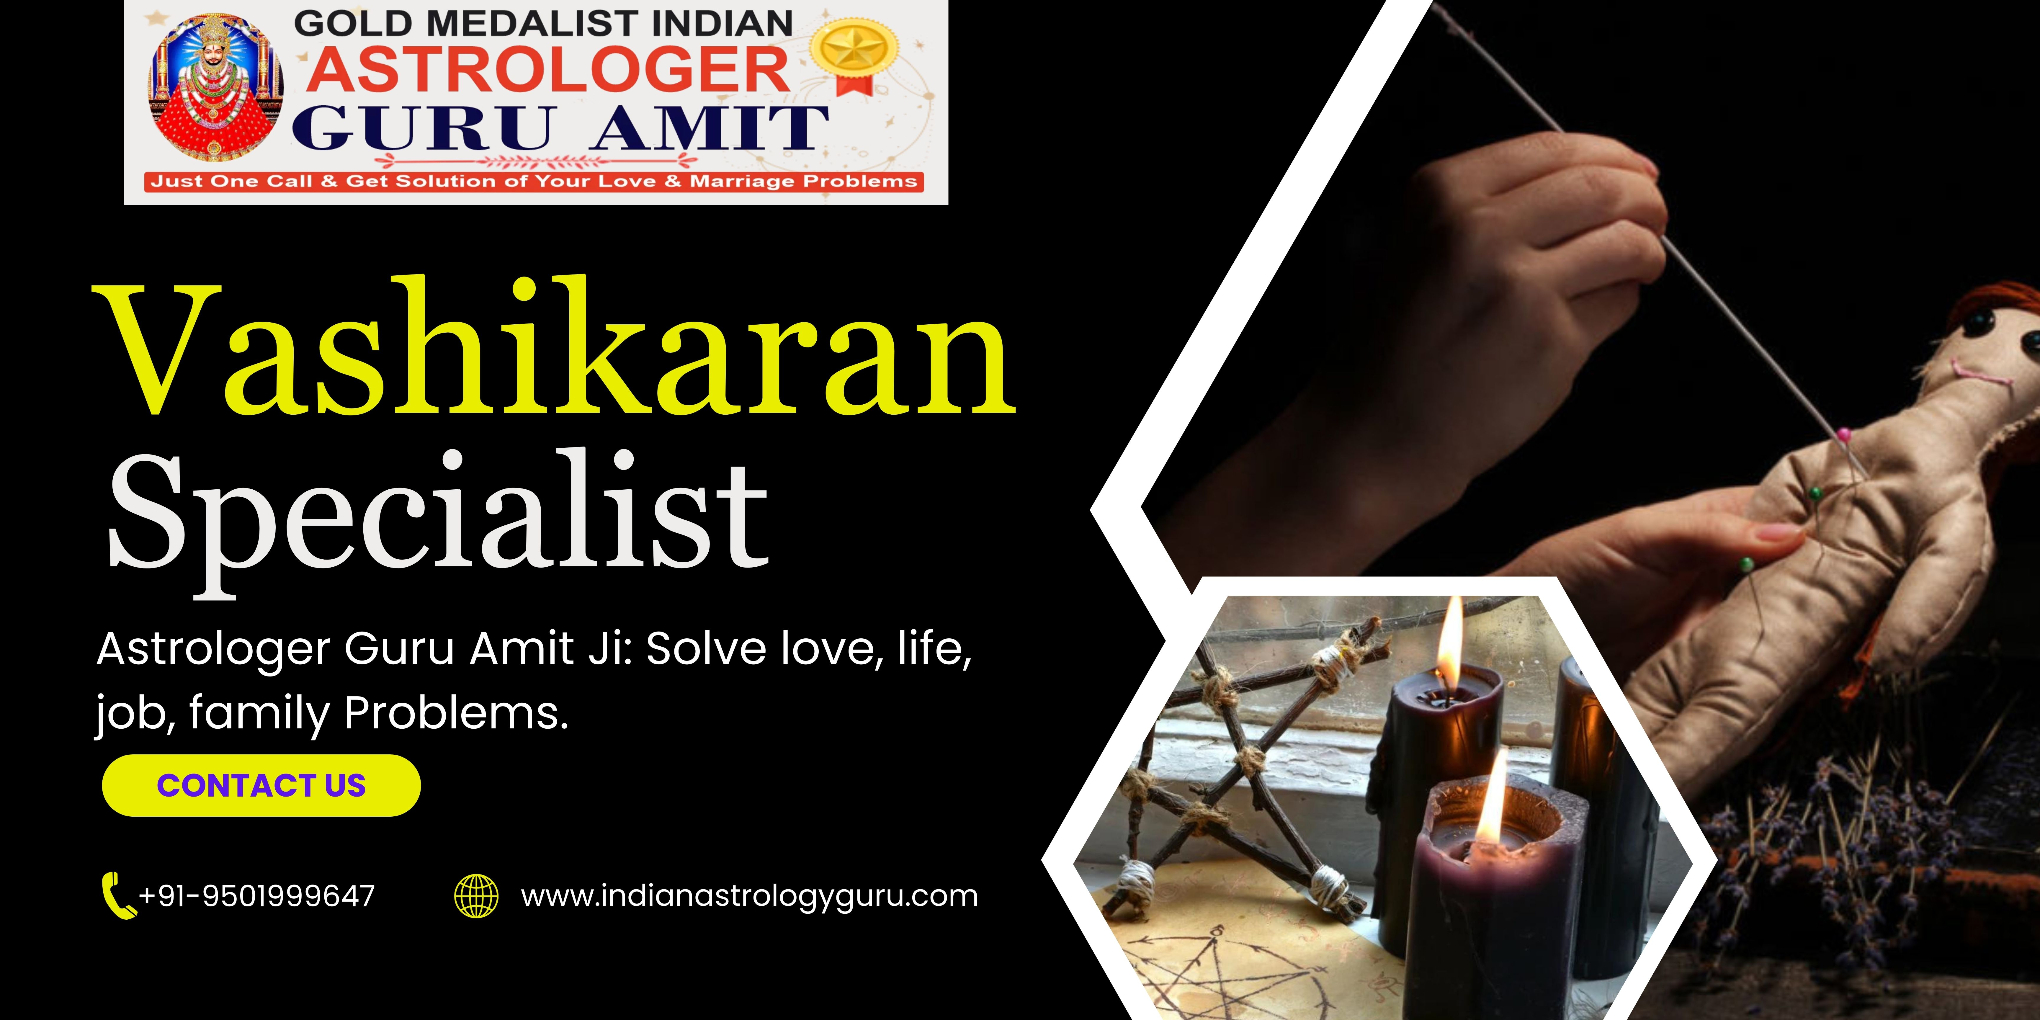  Best Vashikaran Specialist in India - Contact Guru Amit Ji Now!